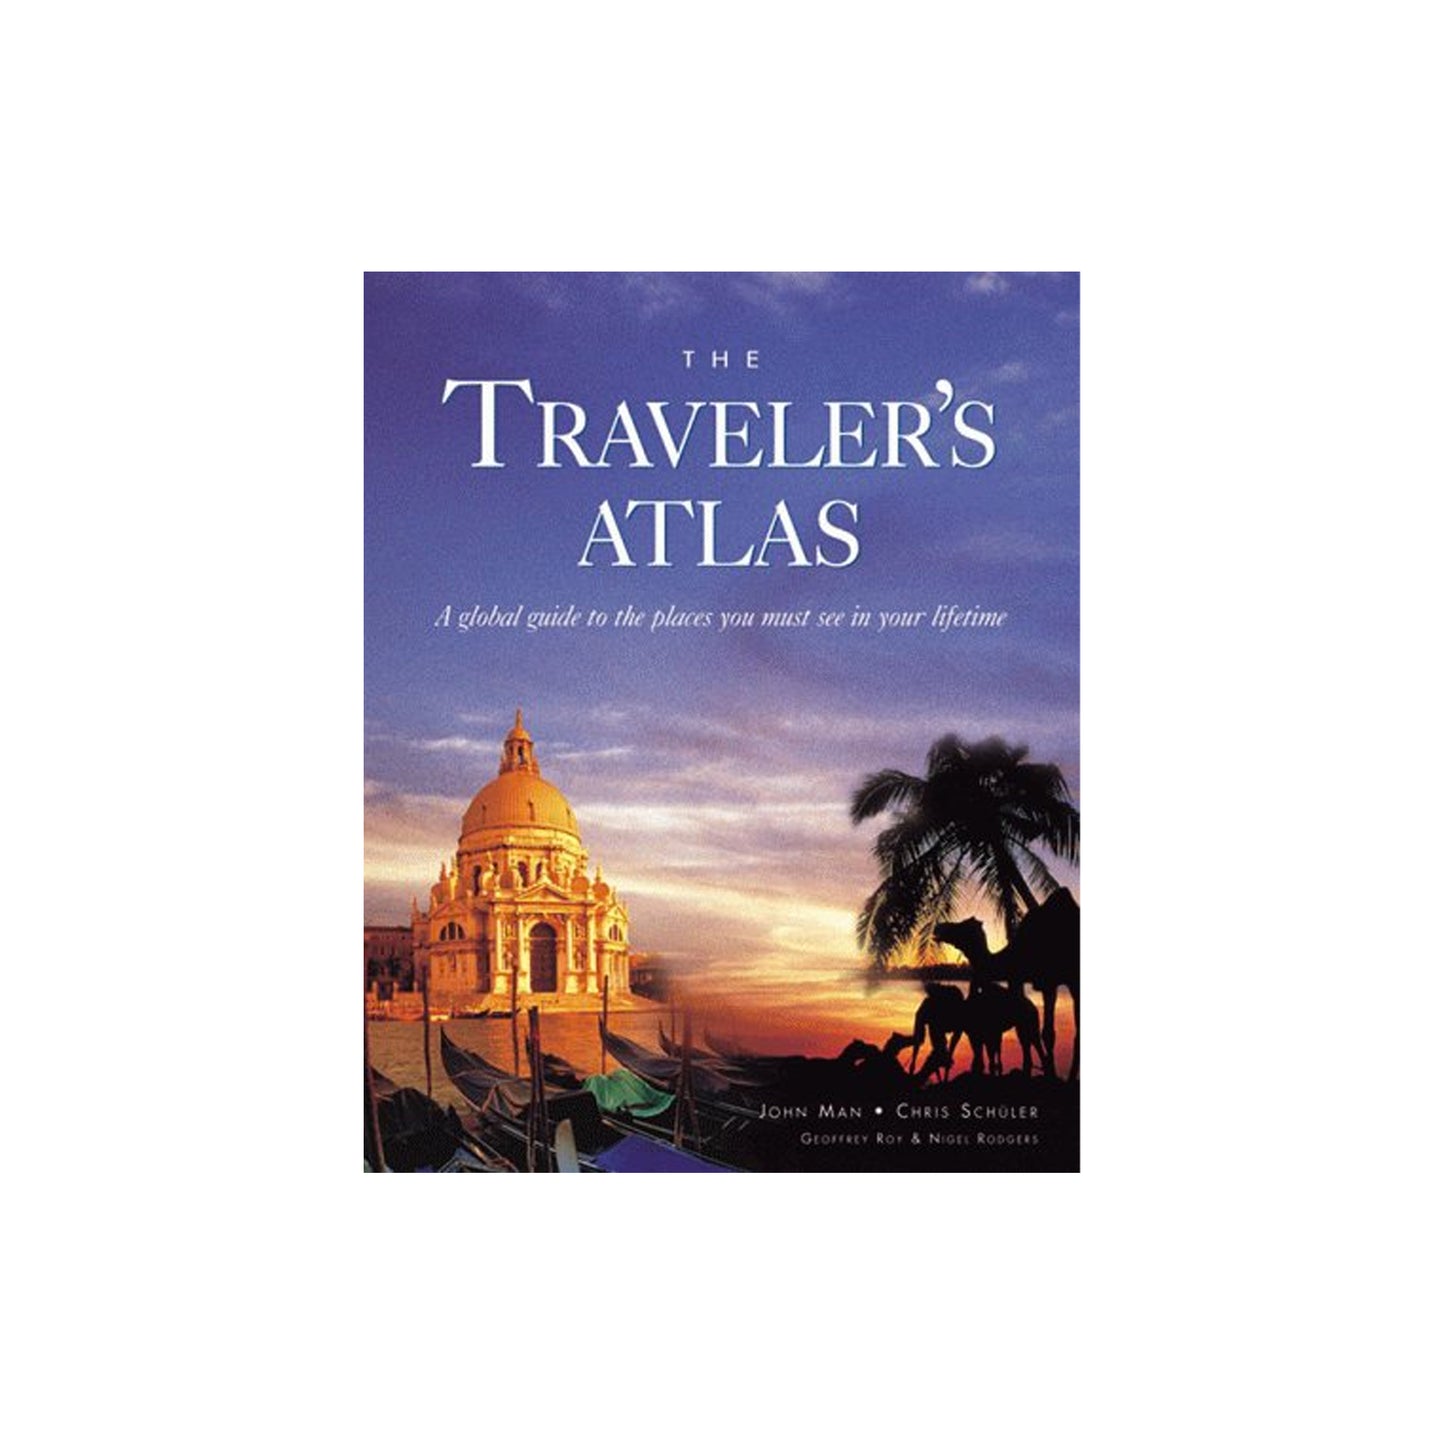 The Traveler's Atlas by John Man and Chris Schuler